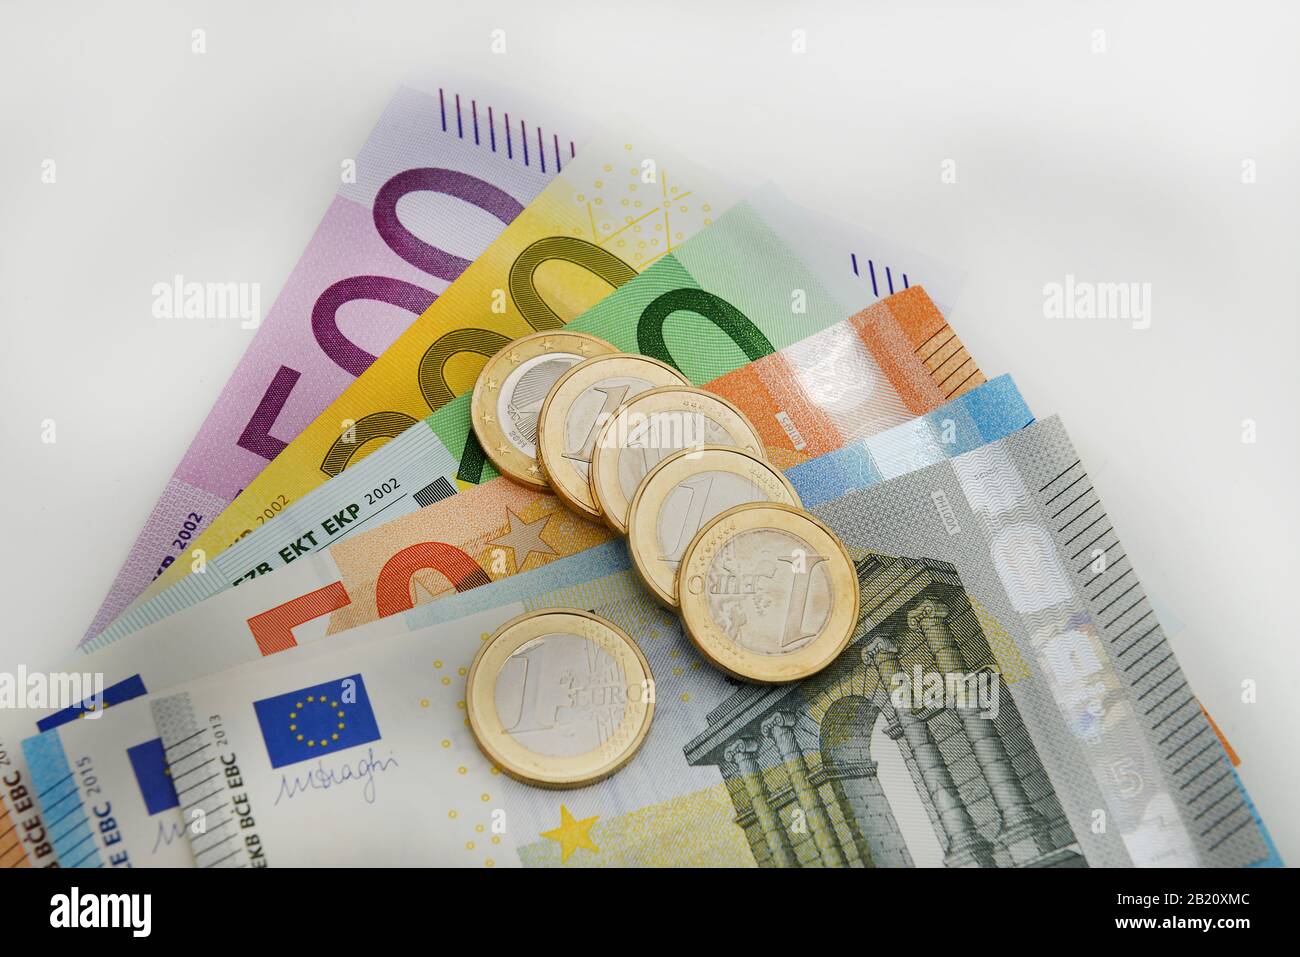 Fecher Euroscheine, Euromuenzen Banque D'Images